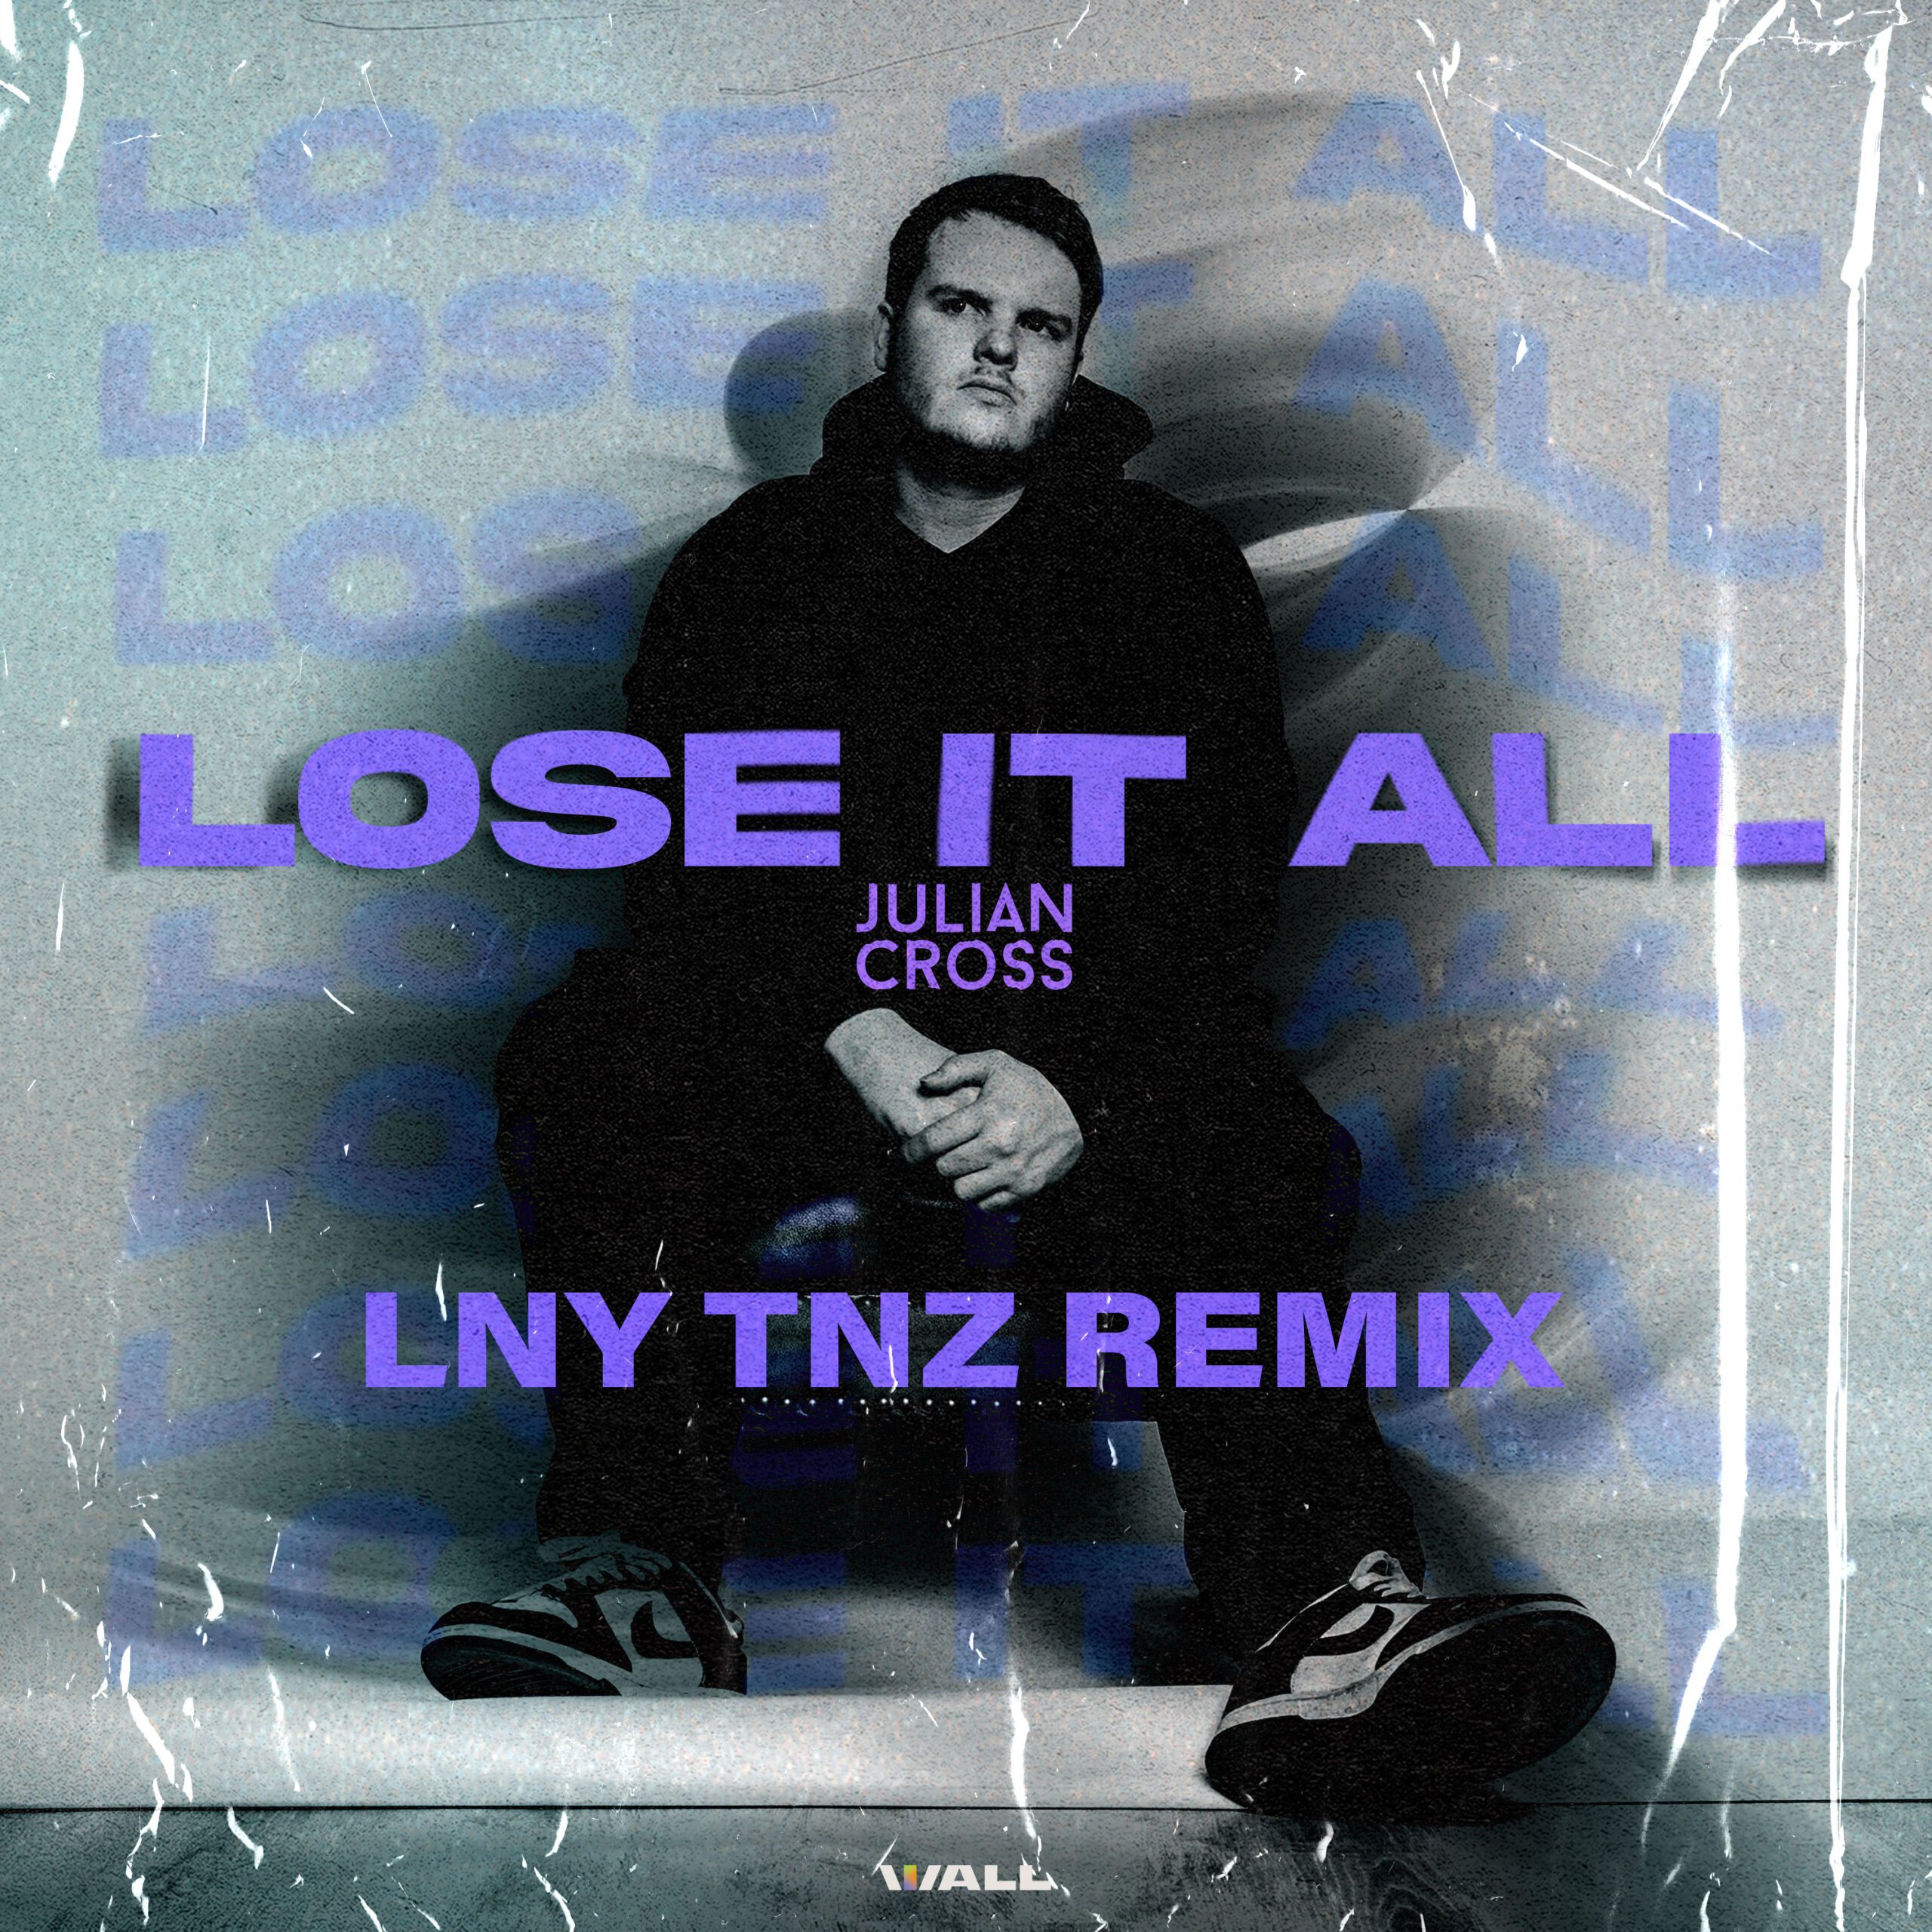 Julian Cross – Lose It All (LNY TNZ Remix)